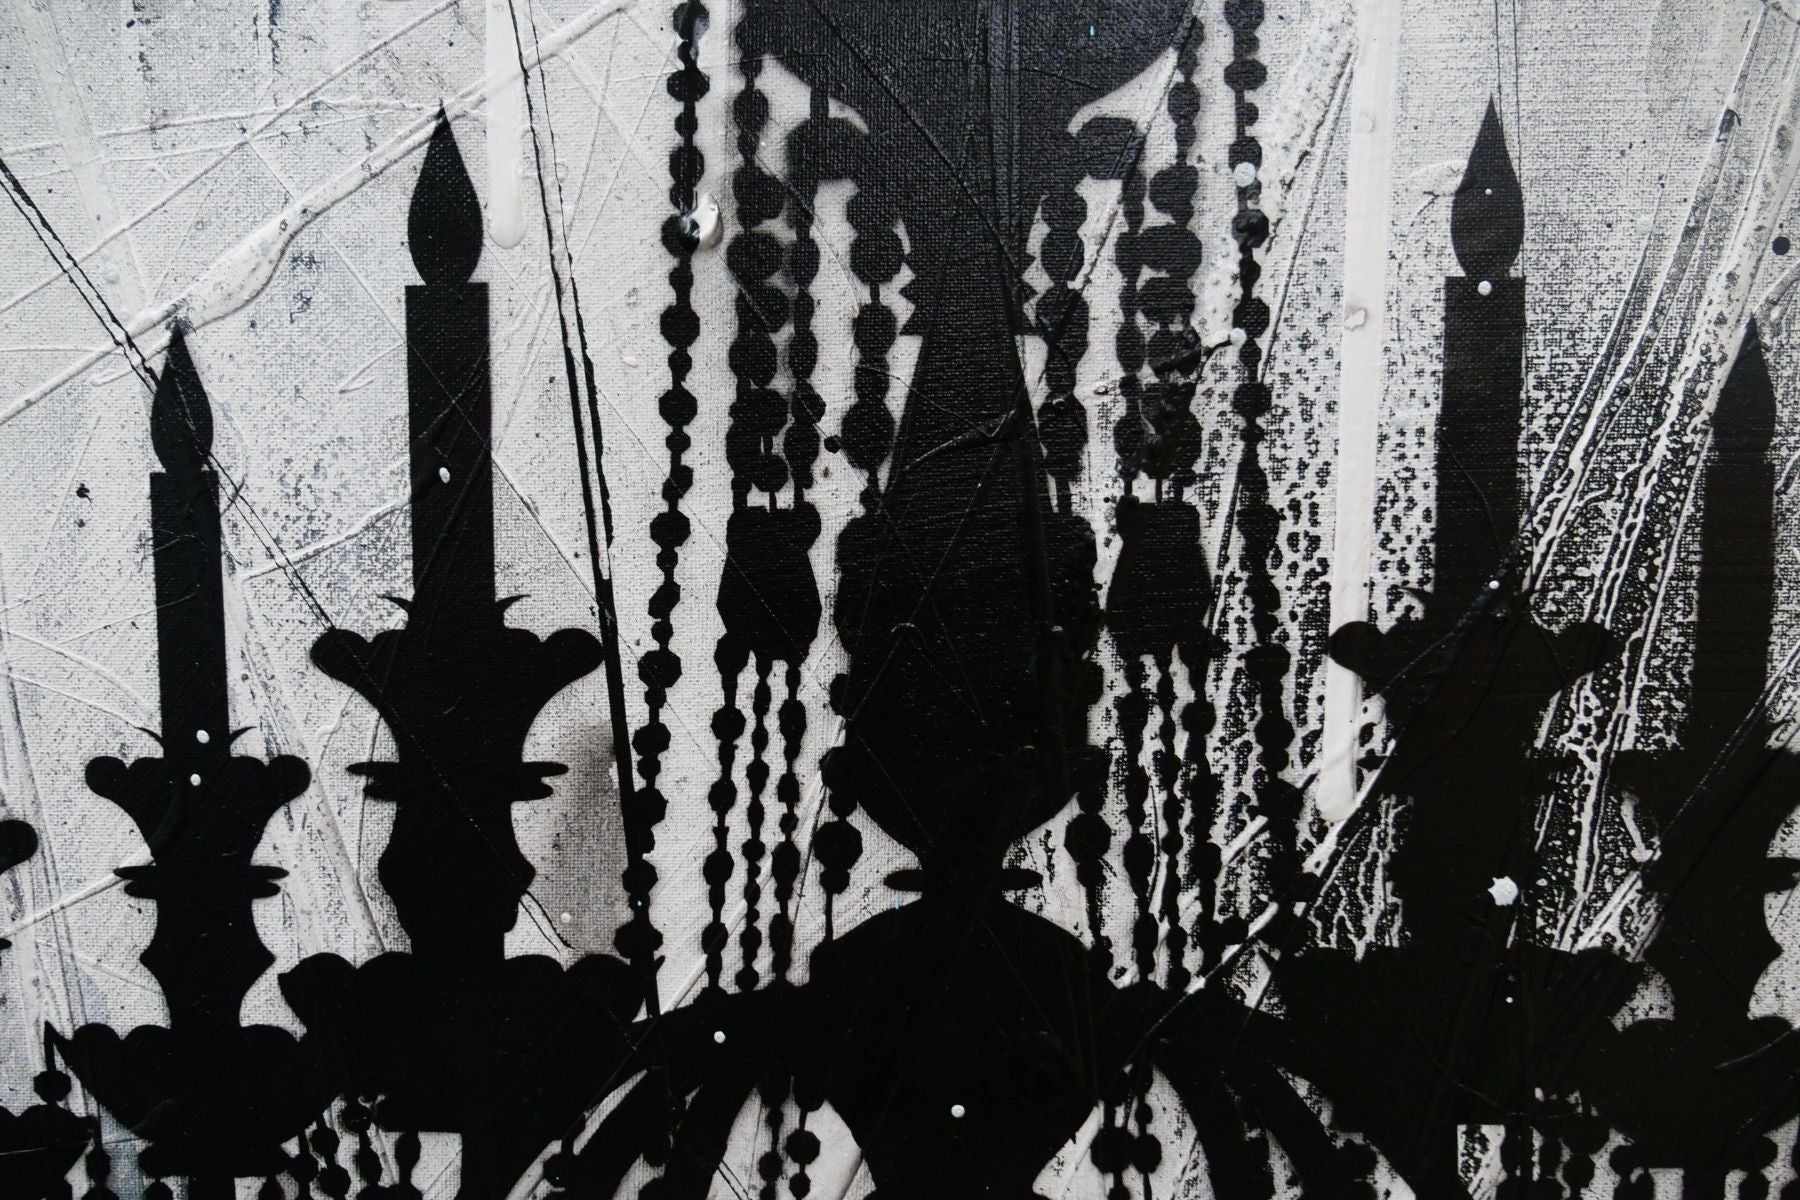 Black Glass 75cm x 100cm Chandelier Textured Urban Pop Art Painting (SOLD)